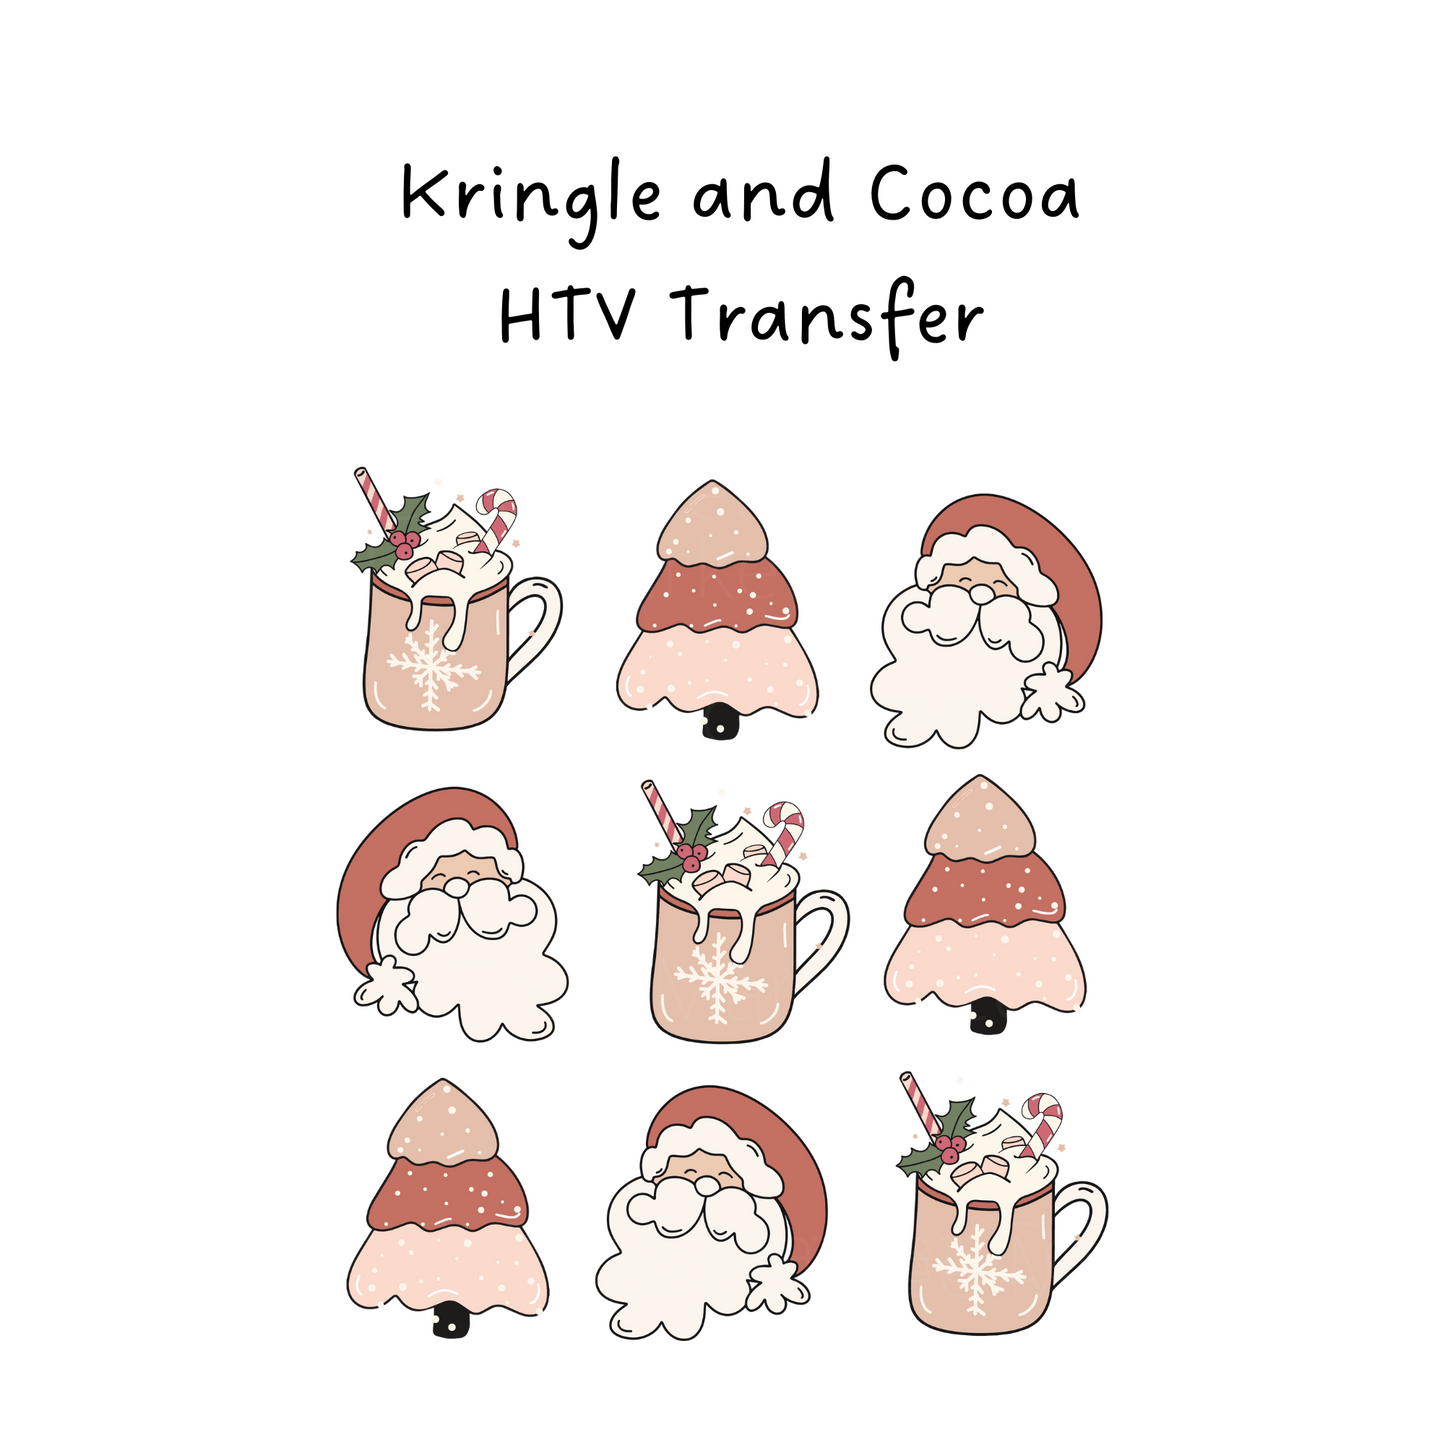 Kringle and Cocoa HTV Transfer